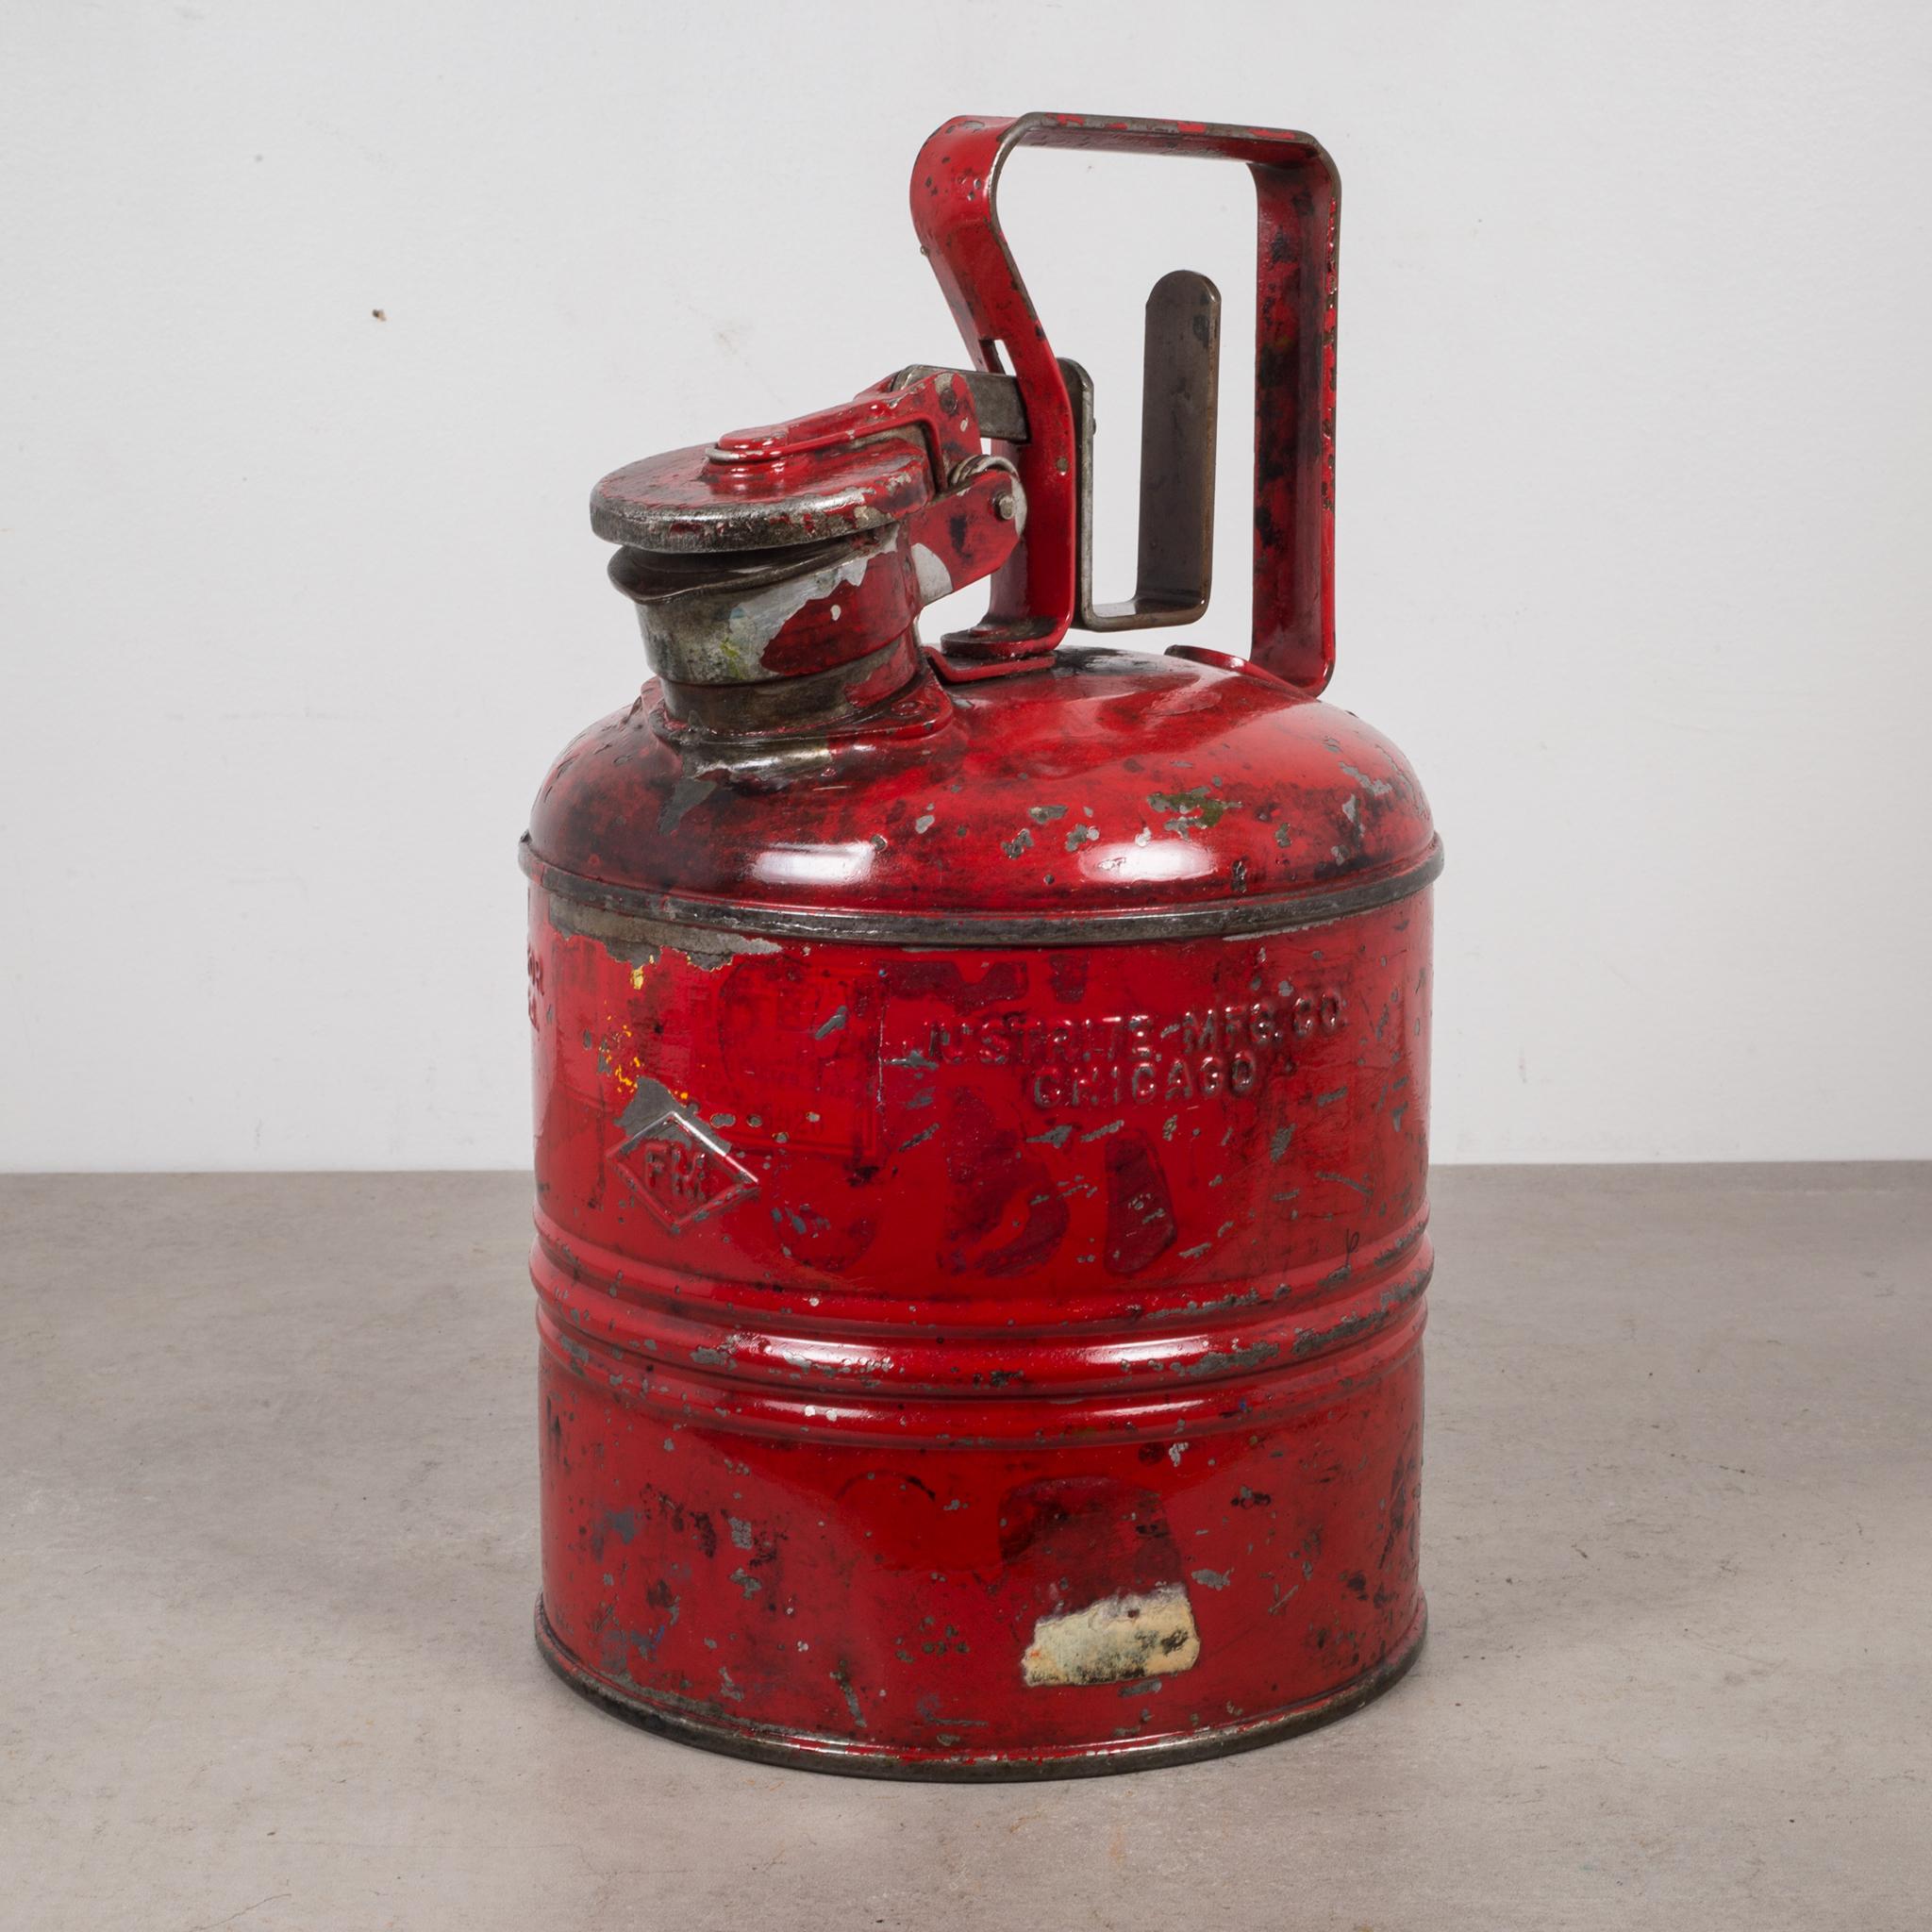 20th Century Vintage Safety Gas Can, circa 1940